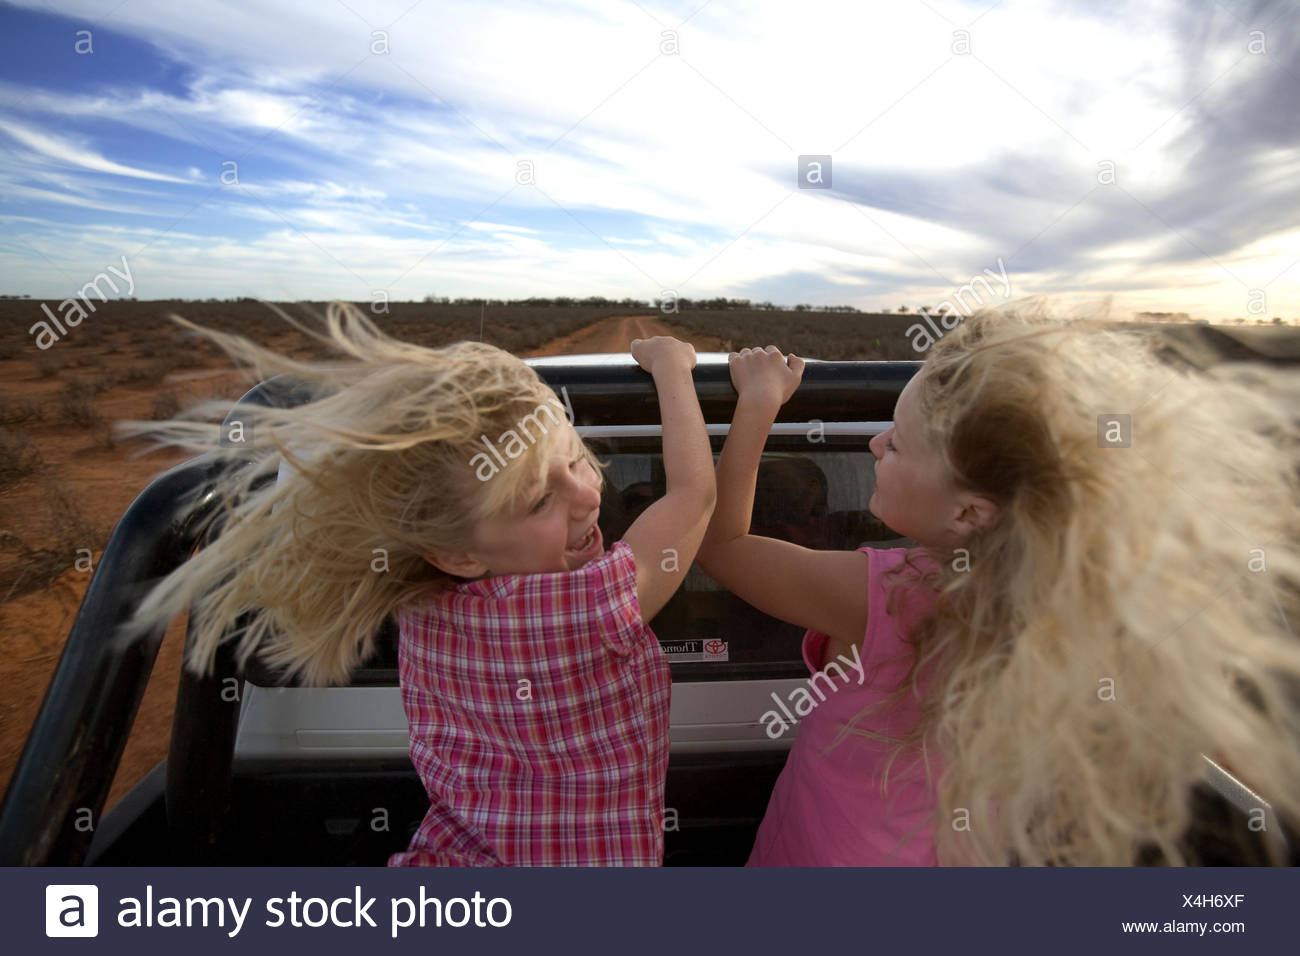 girls ride on truck